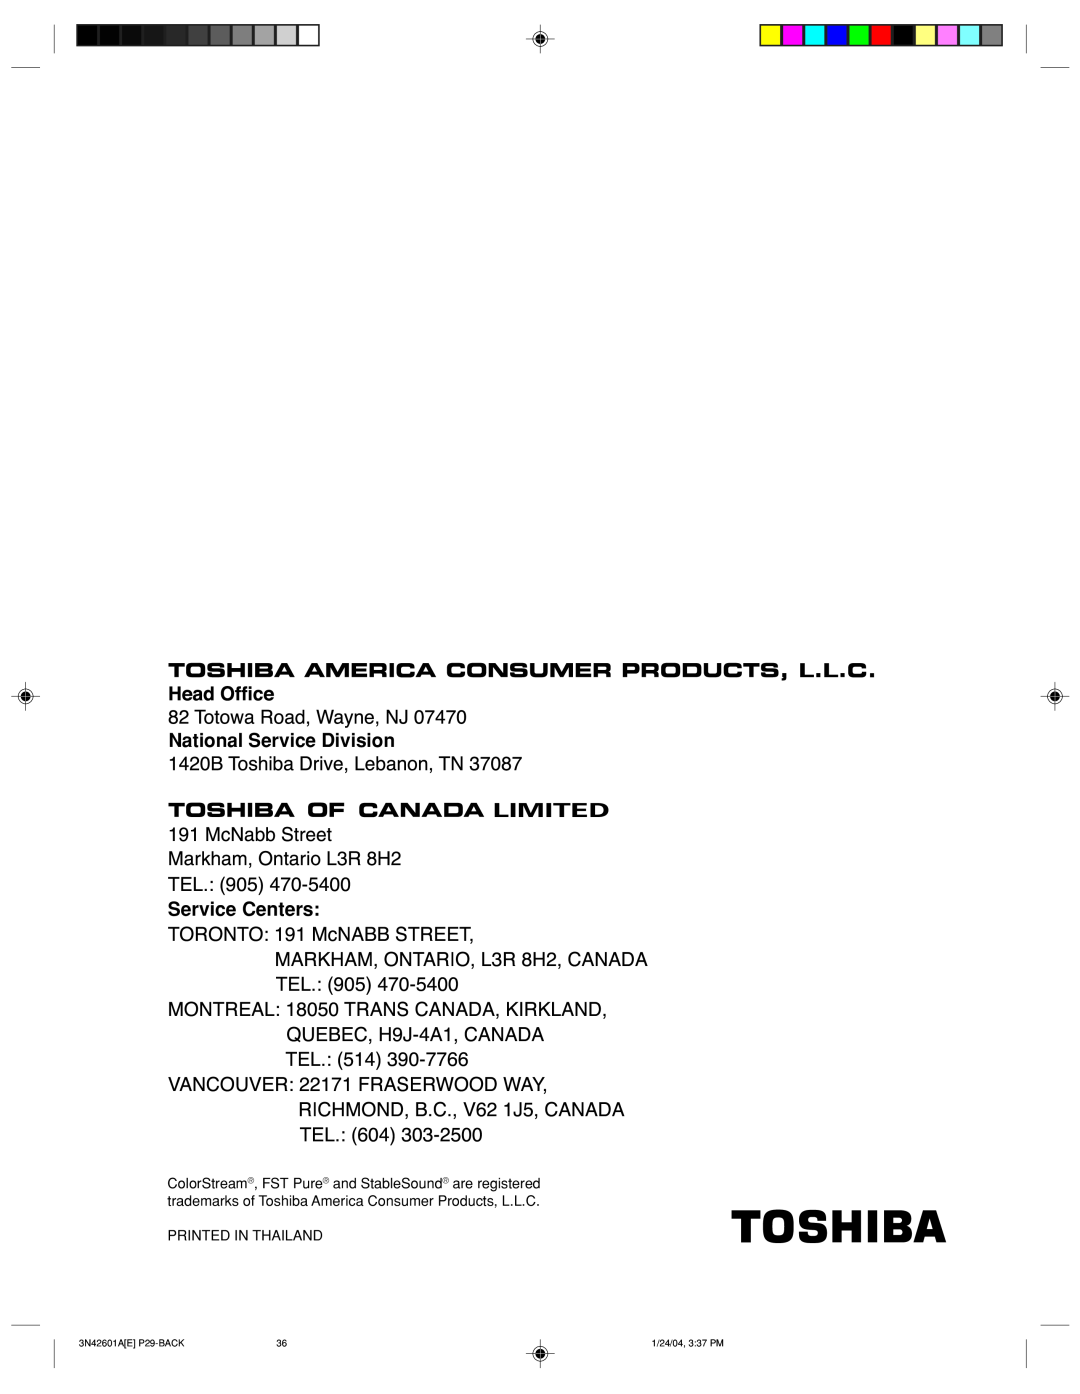 Toshiba 27A44 appendix TORONTONationalEL.905Service470-5400Division, RICHMOND,TEL.604303B.C-2500.,V621J5,CANADA 